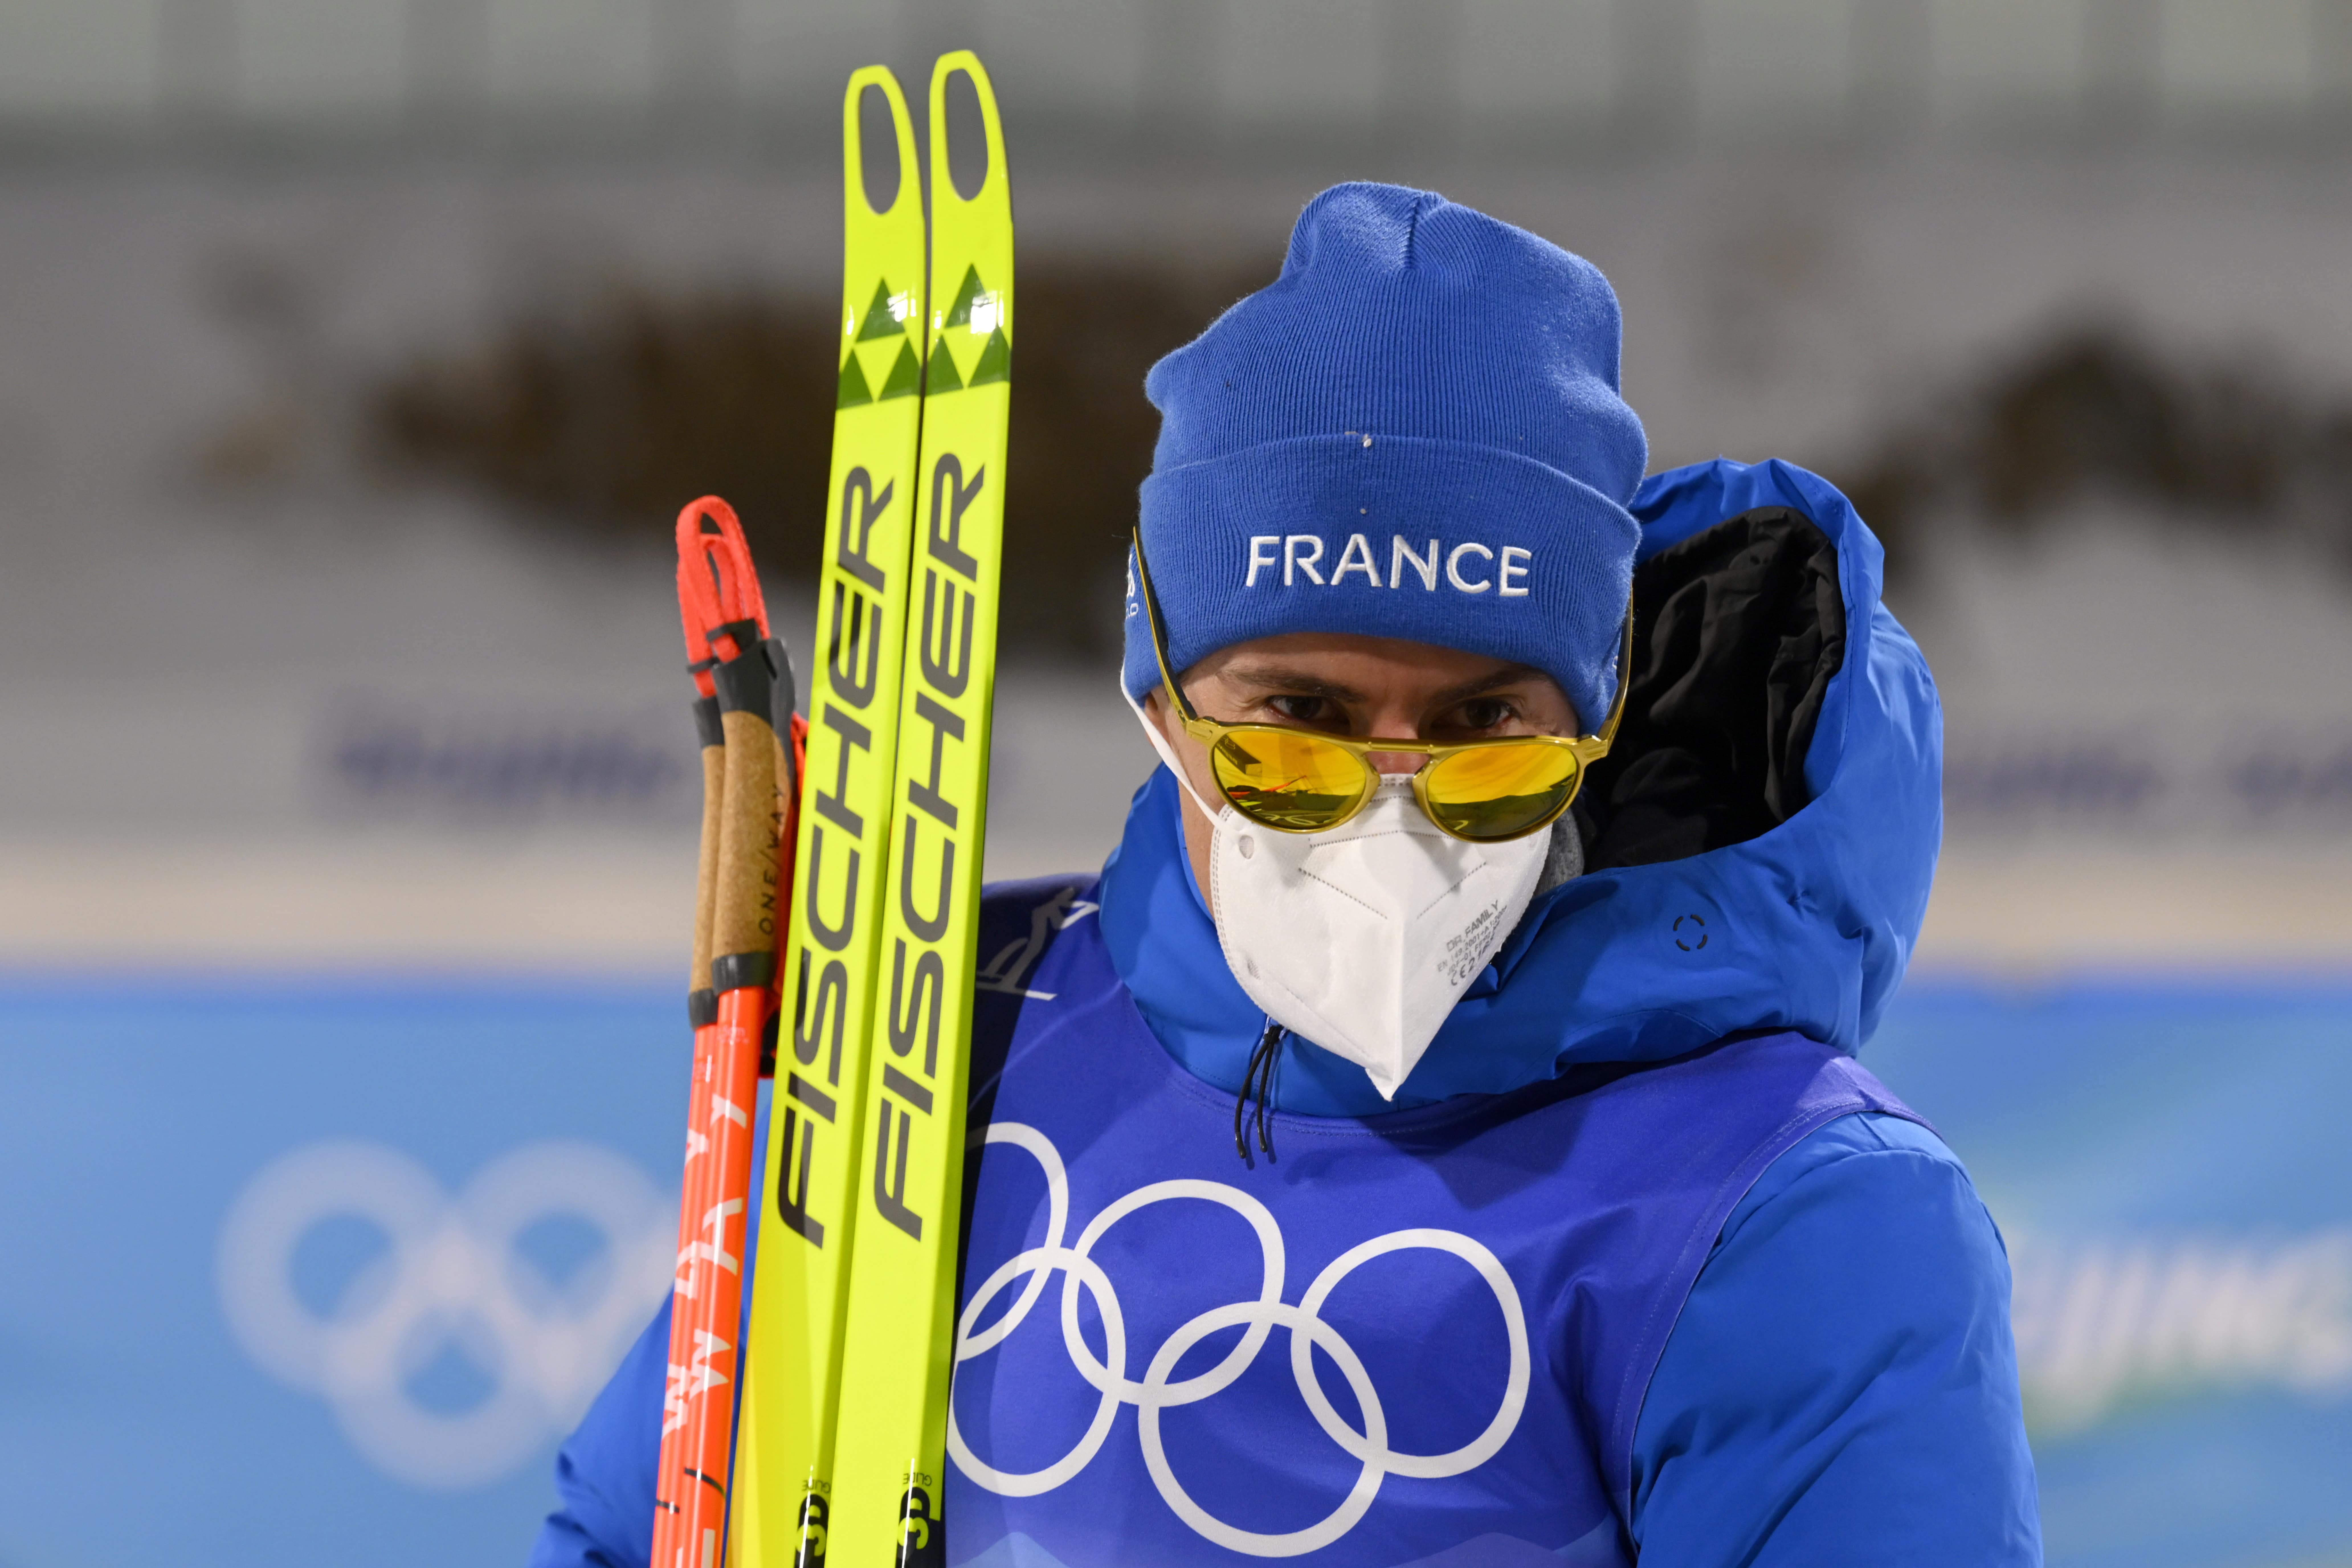 Quentin Fillon Maillet - Podium France Olympique Pékin 2022 - Médaille d'or Biathlon individuel 20km 